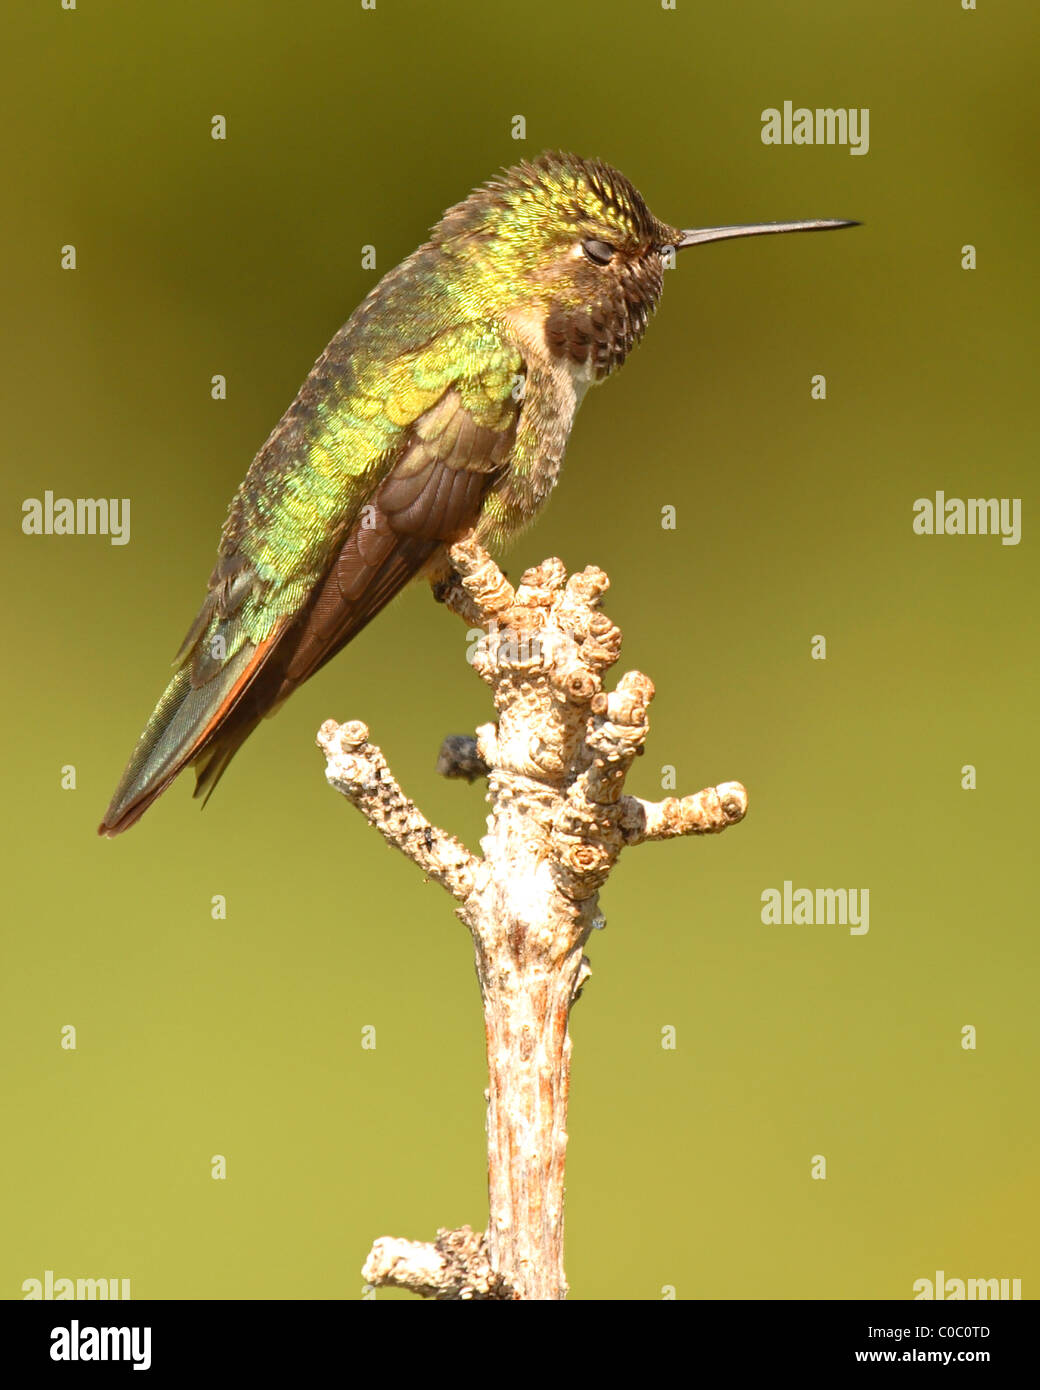 A Hummingbird taking a quick siesta. Stock Photo